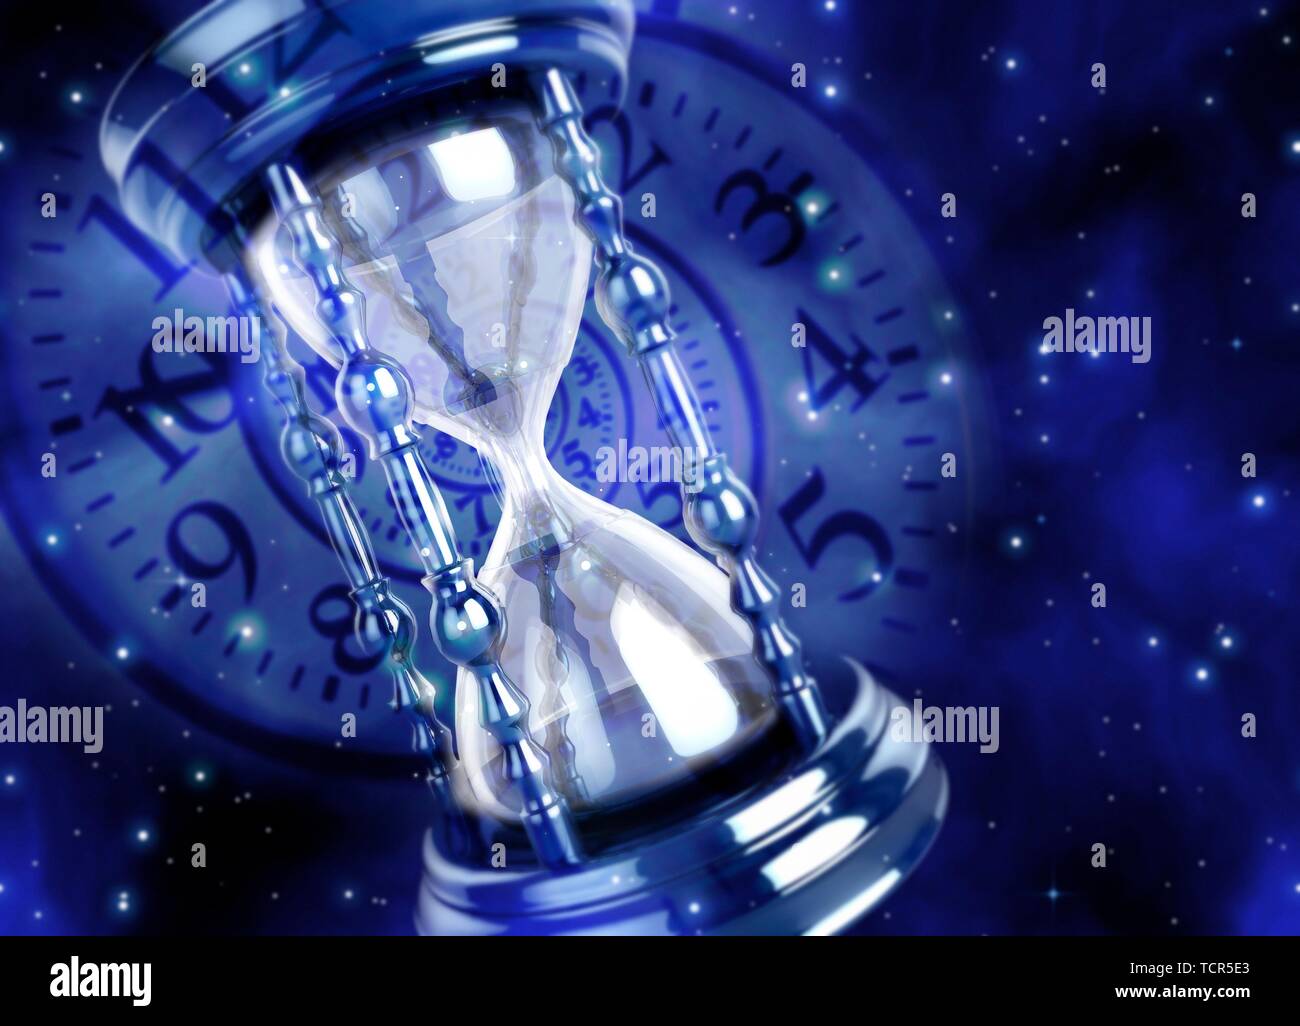 Egg timer and clock, illustration Stock Photo